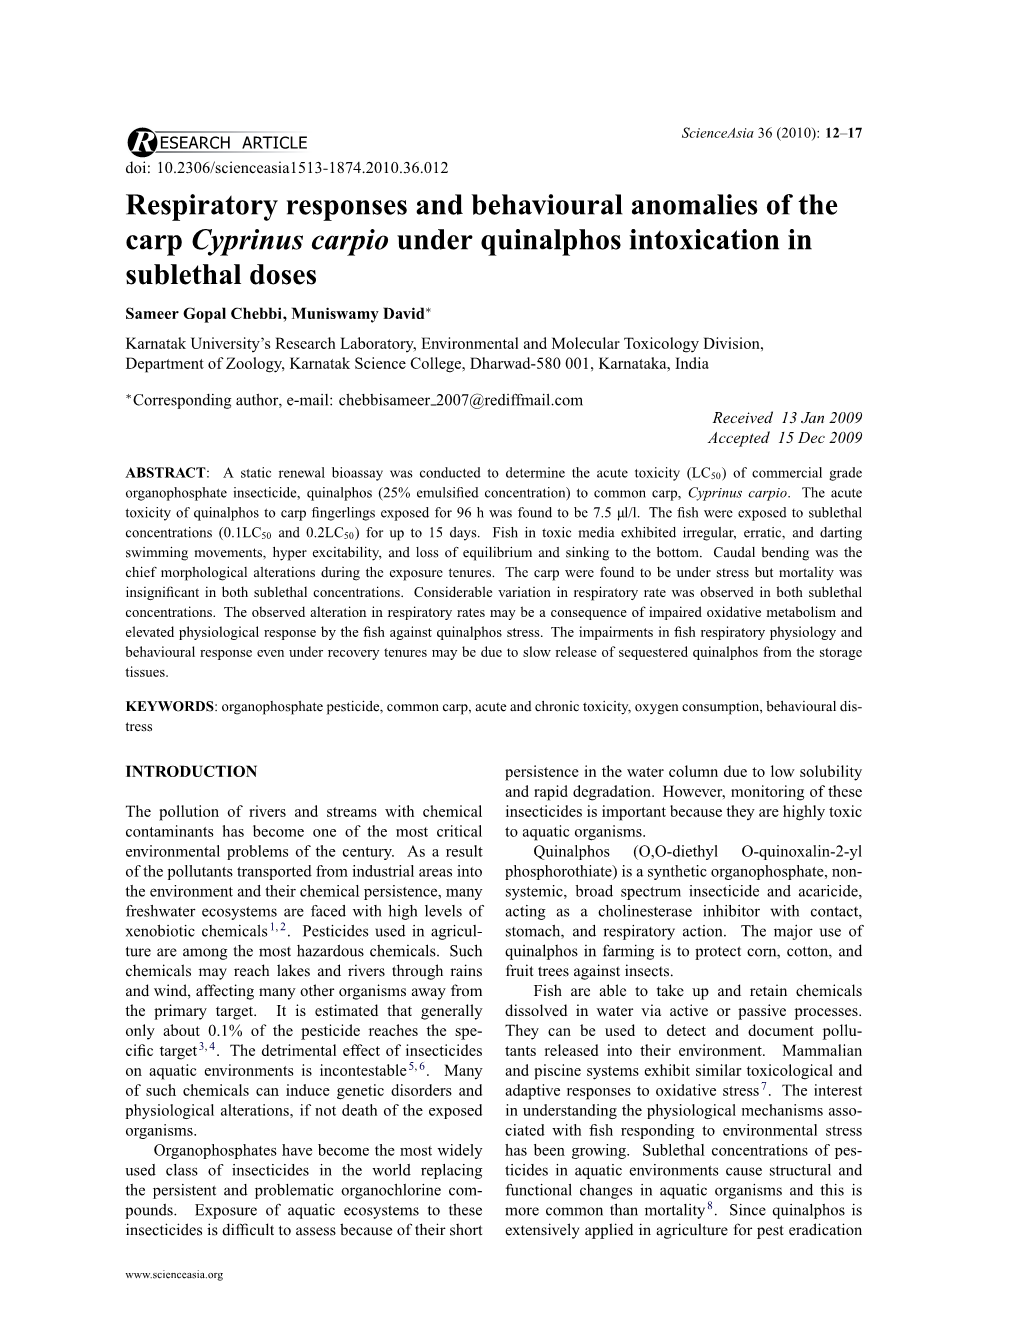 Respiratory Responses and Behavioural Anomalies of the Carp